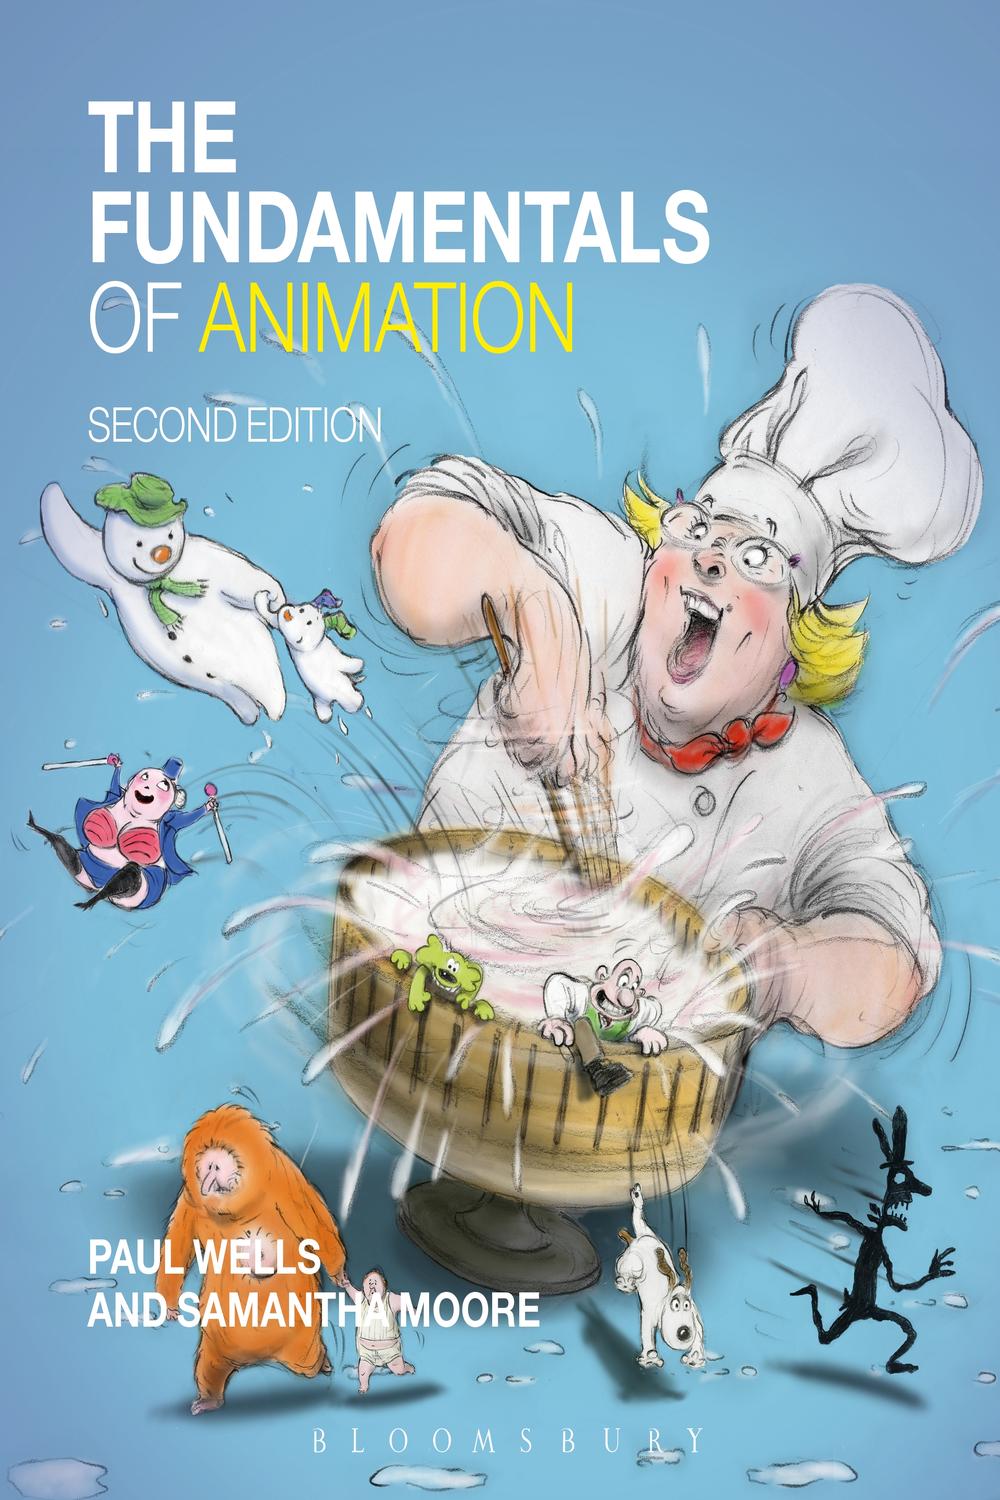 PDF] The Fundamentals of Animation by Paul Wells eBook | Perlego